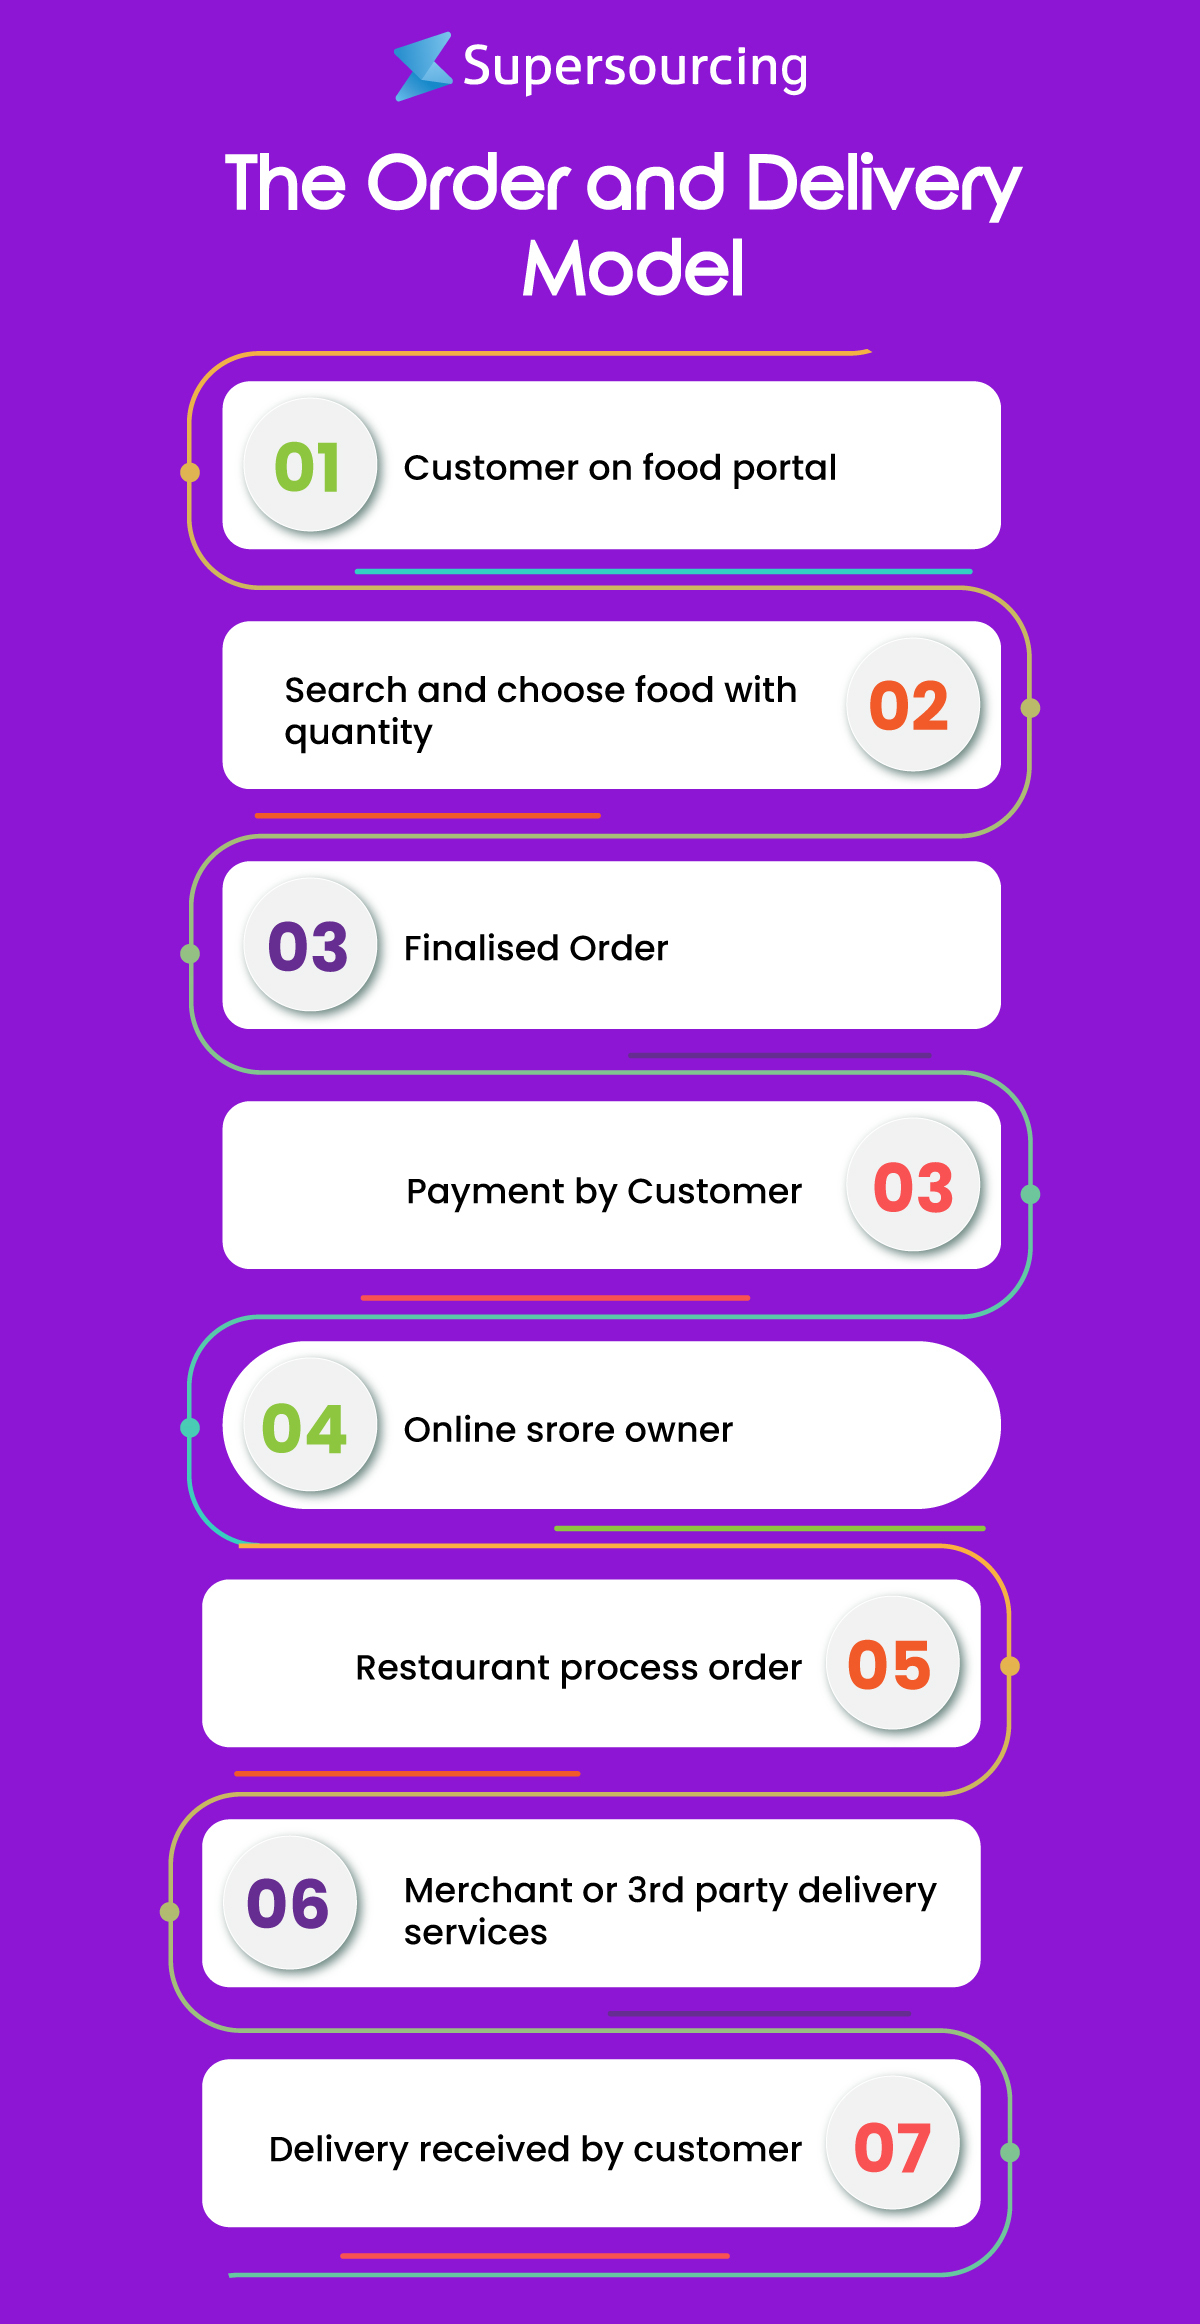 food ordering app like Zomato